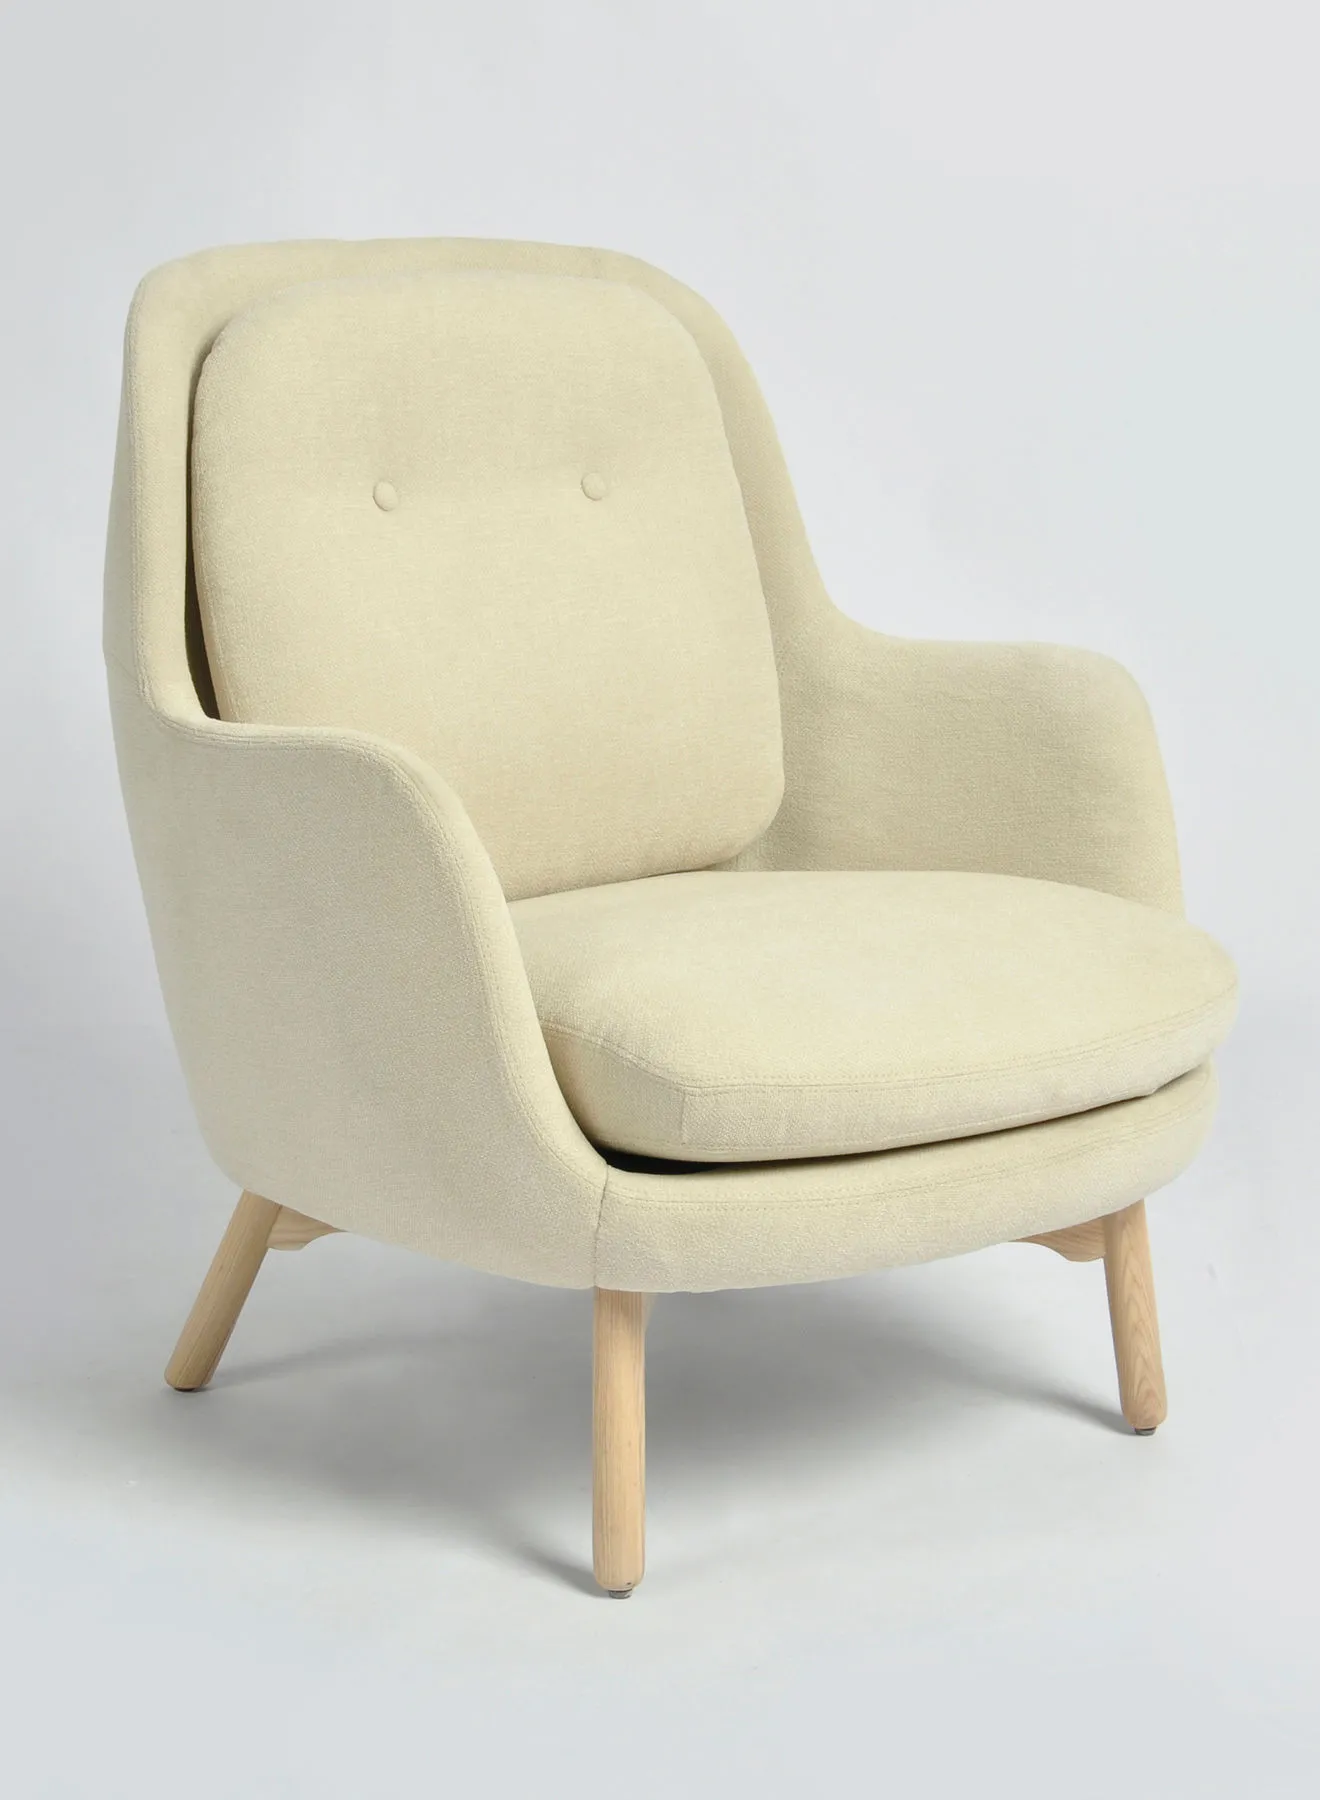 Switch Armchair In Beige Wooden Chair Size 77 X 87 X 90